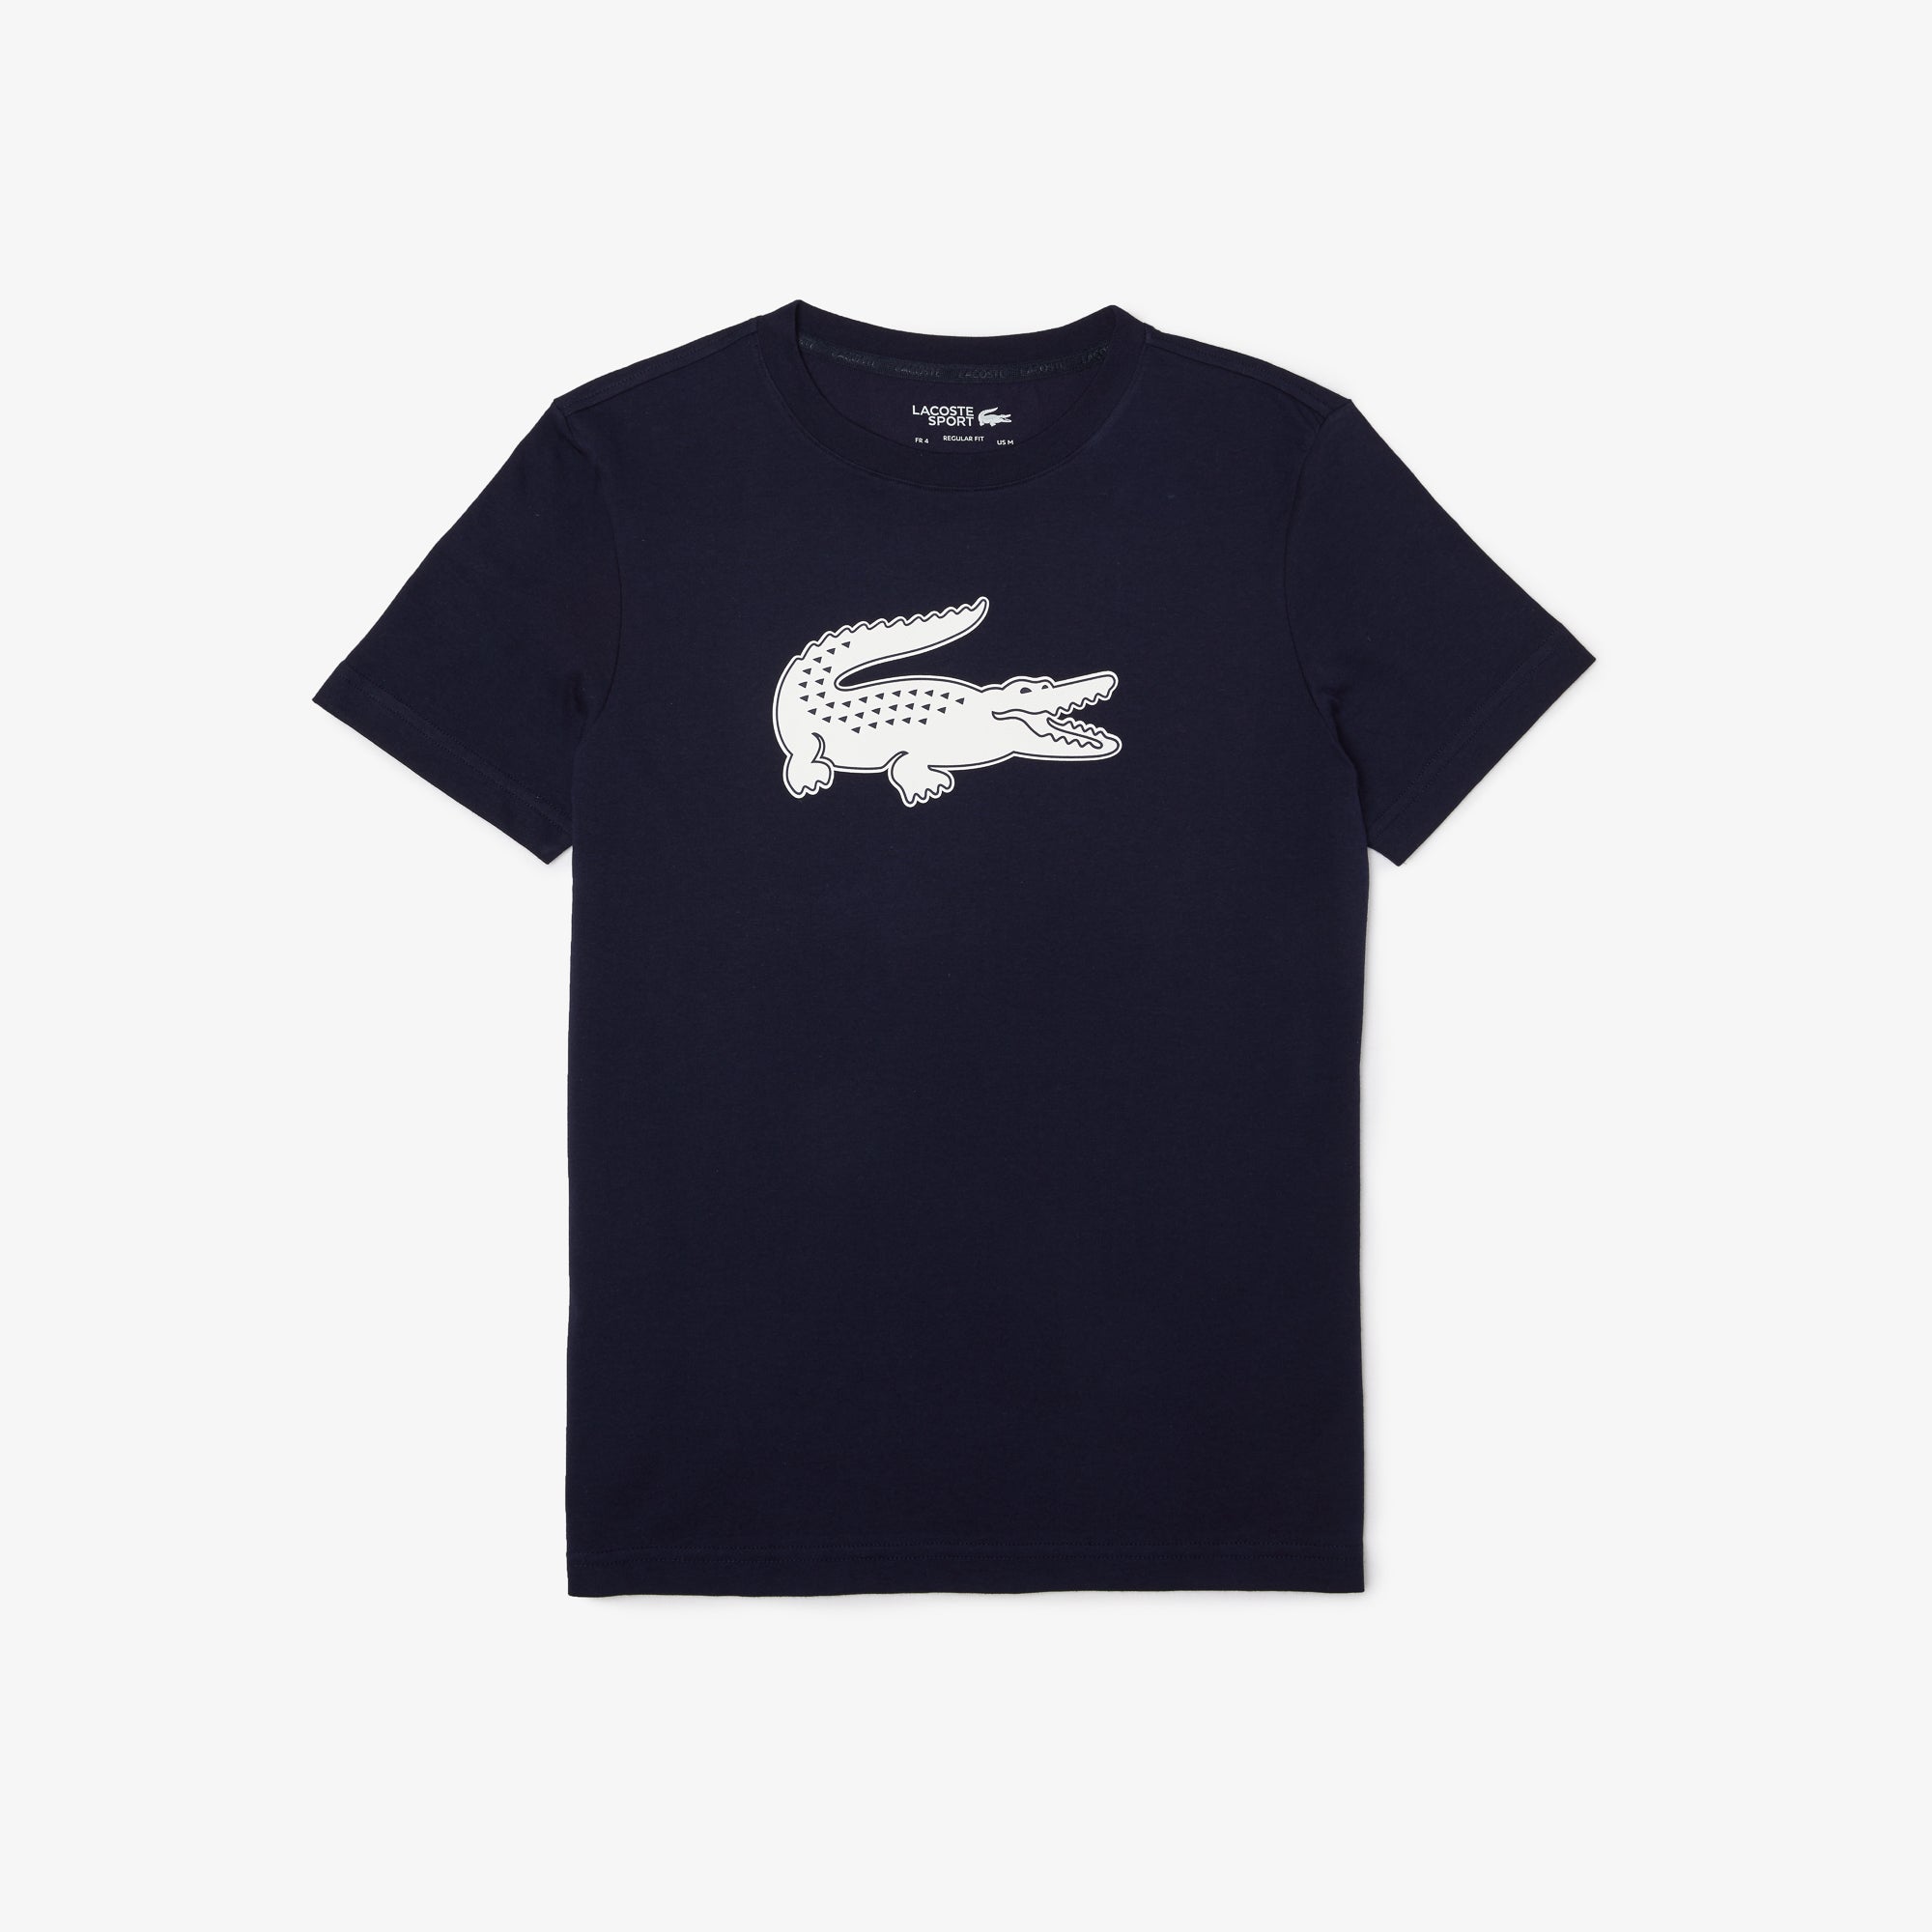 Lacoste T-shirt (Navy Blue/White) - S